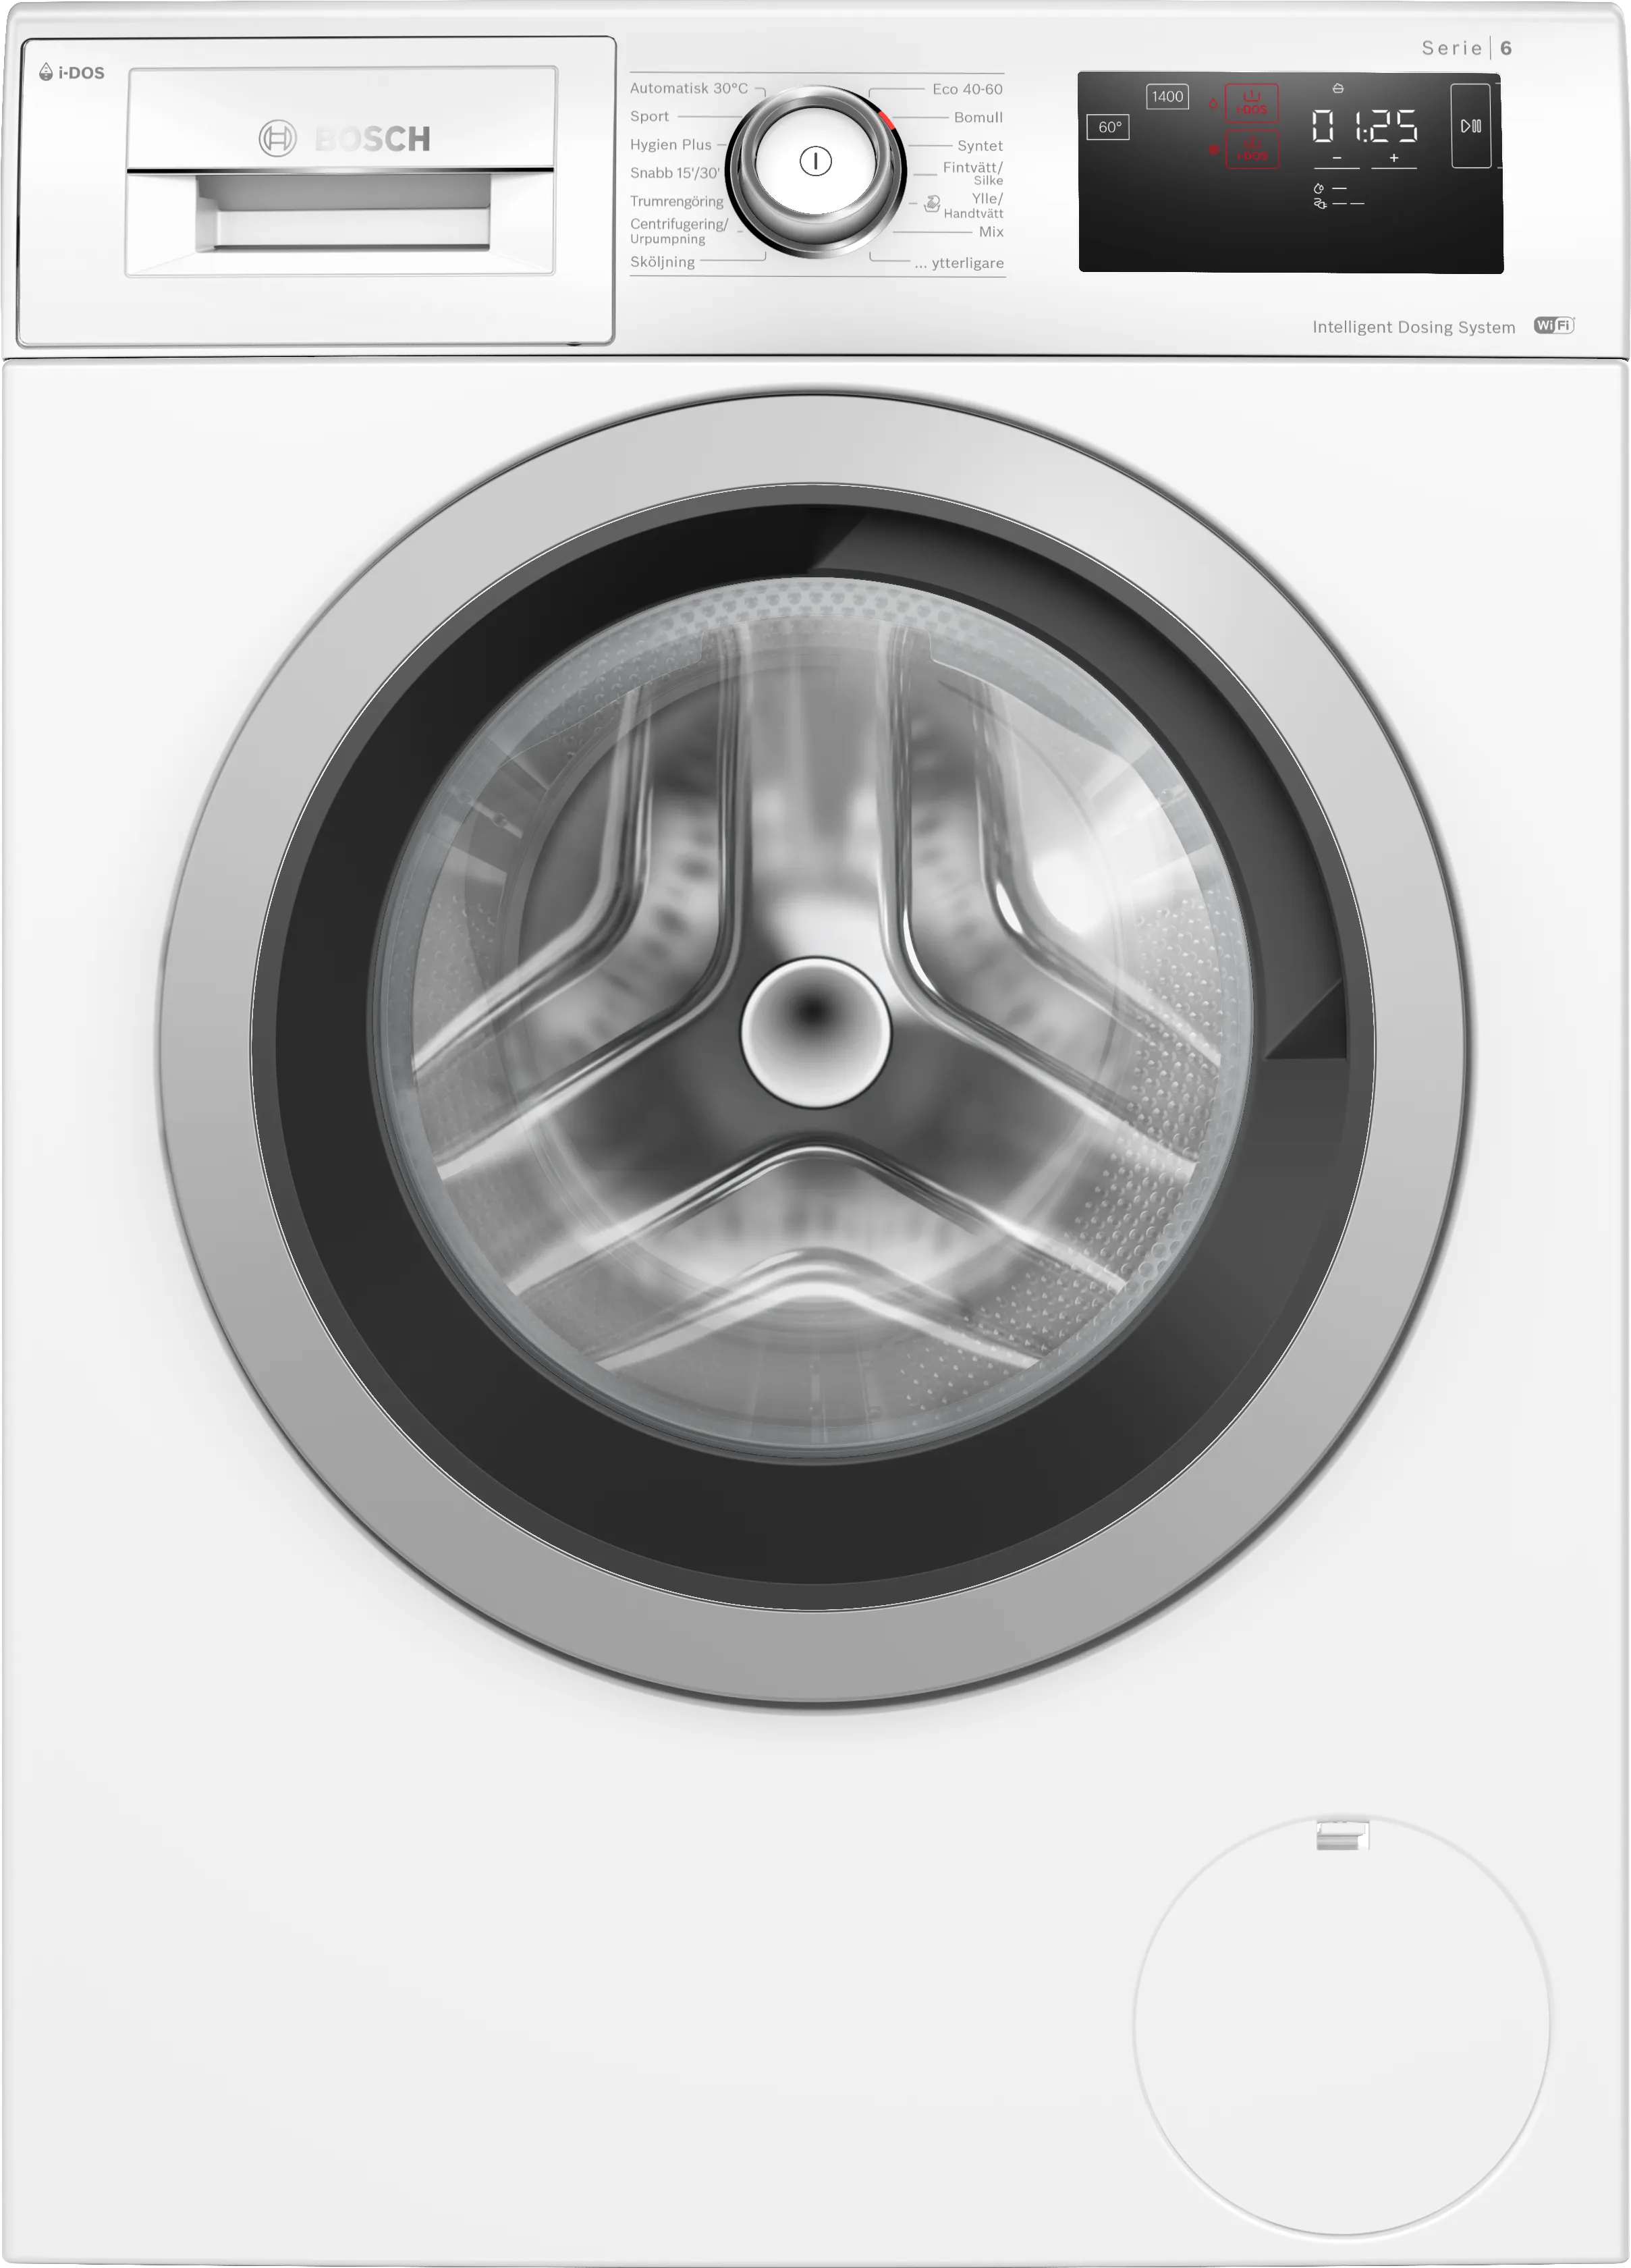 Series 6 washing machine, frontloader fullsize 10 kg 1400 rpm 